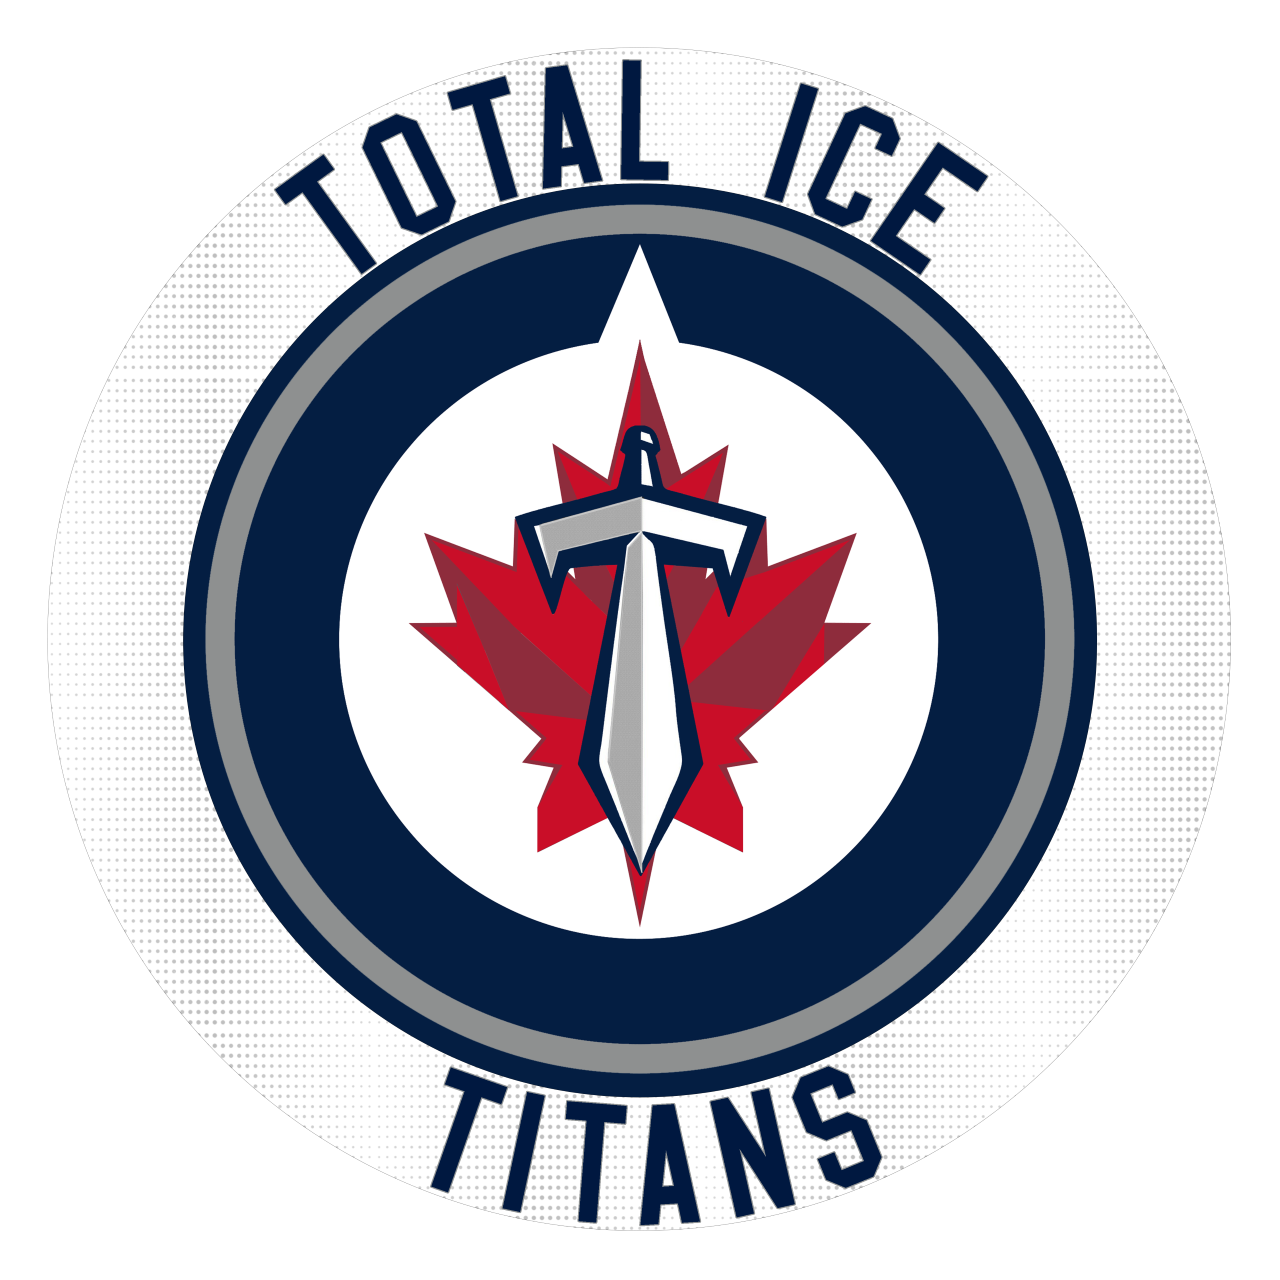 2008 Elite Total Ice Titans